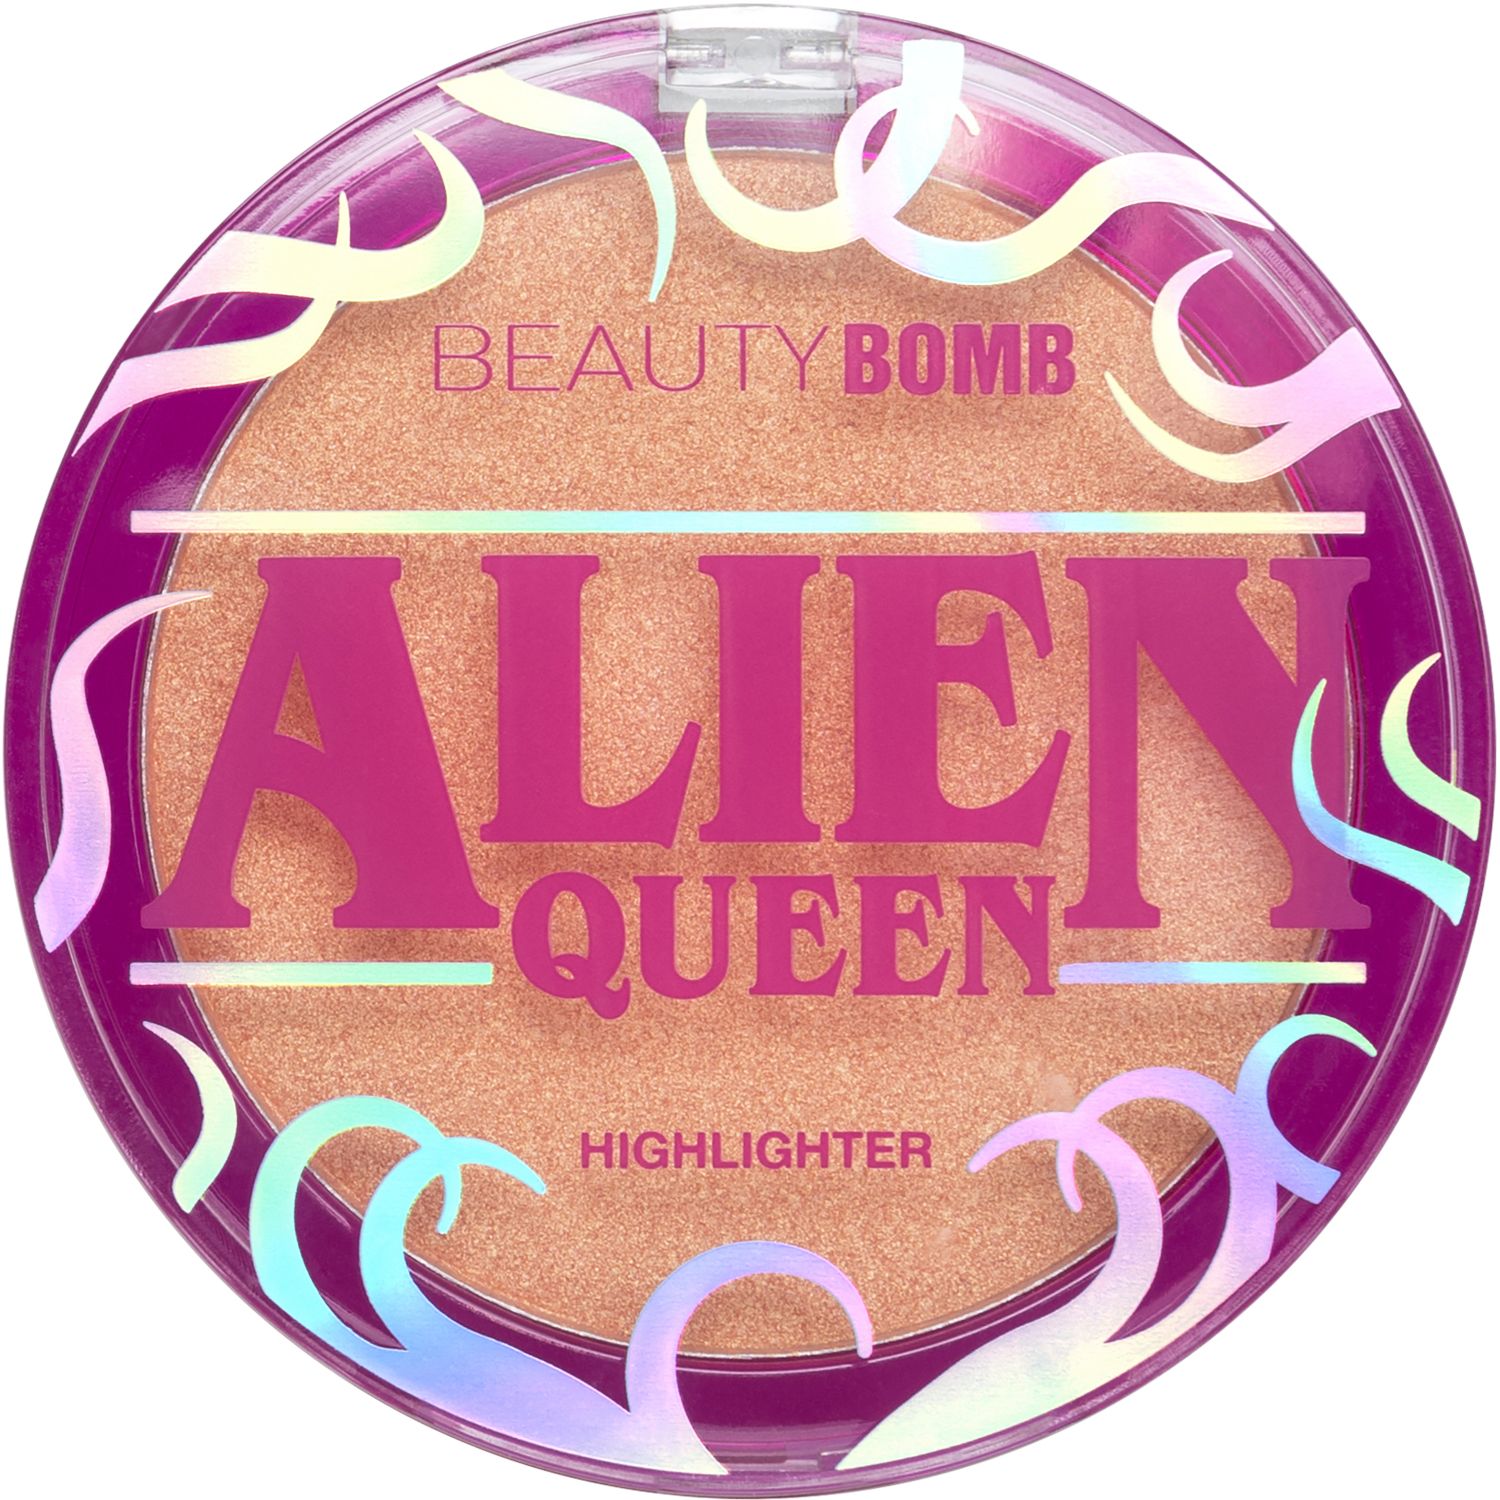 Хайлайтер Beauty Bomb Alien Queen  с золотистым сиянием, персиковый, №01, 6 г alien eau de toilette